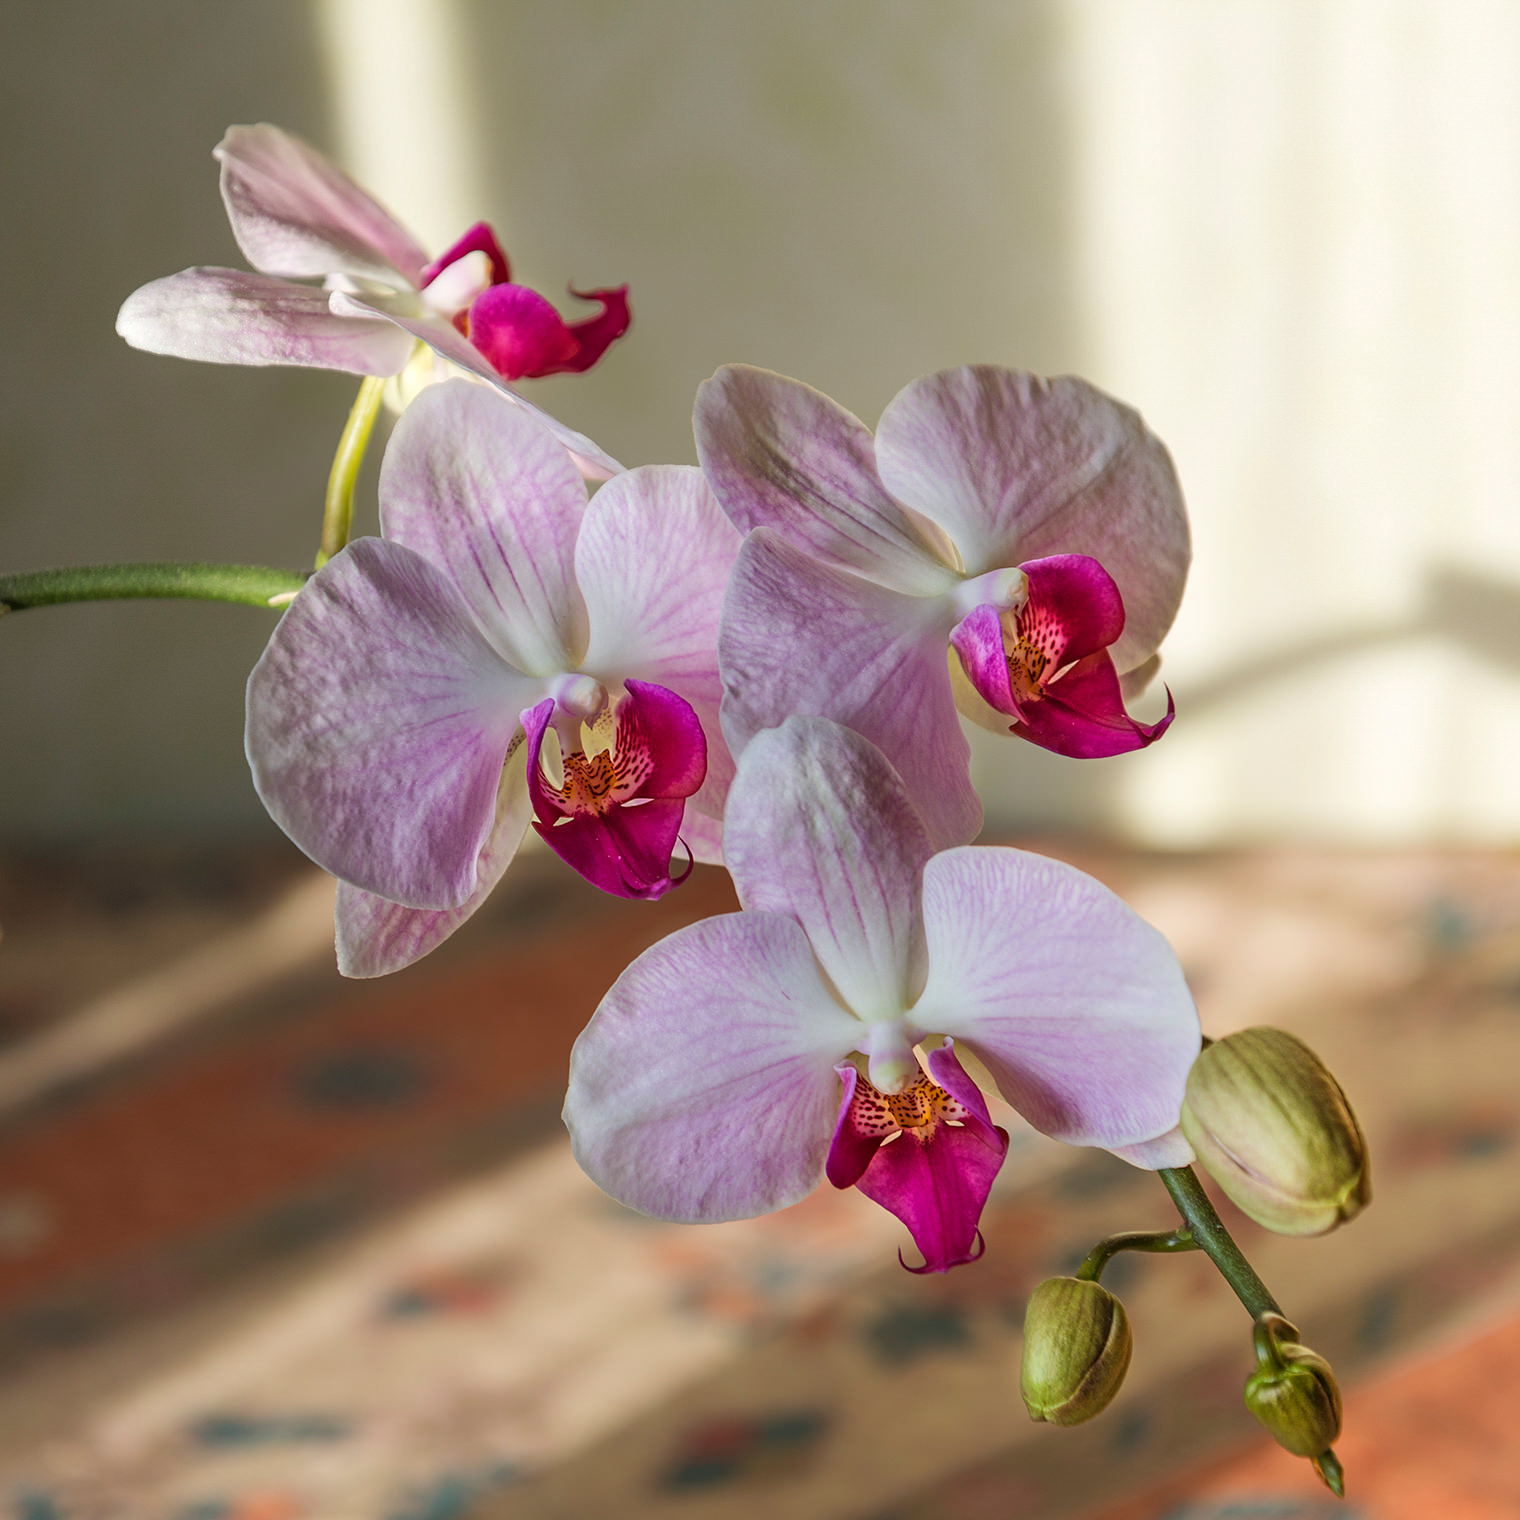 Про орхидею и свет из окна